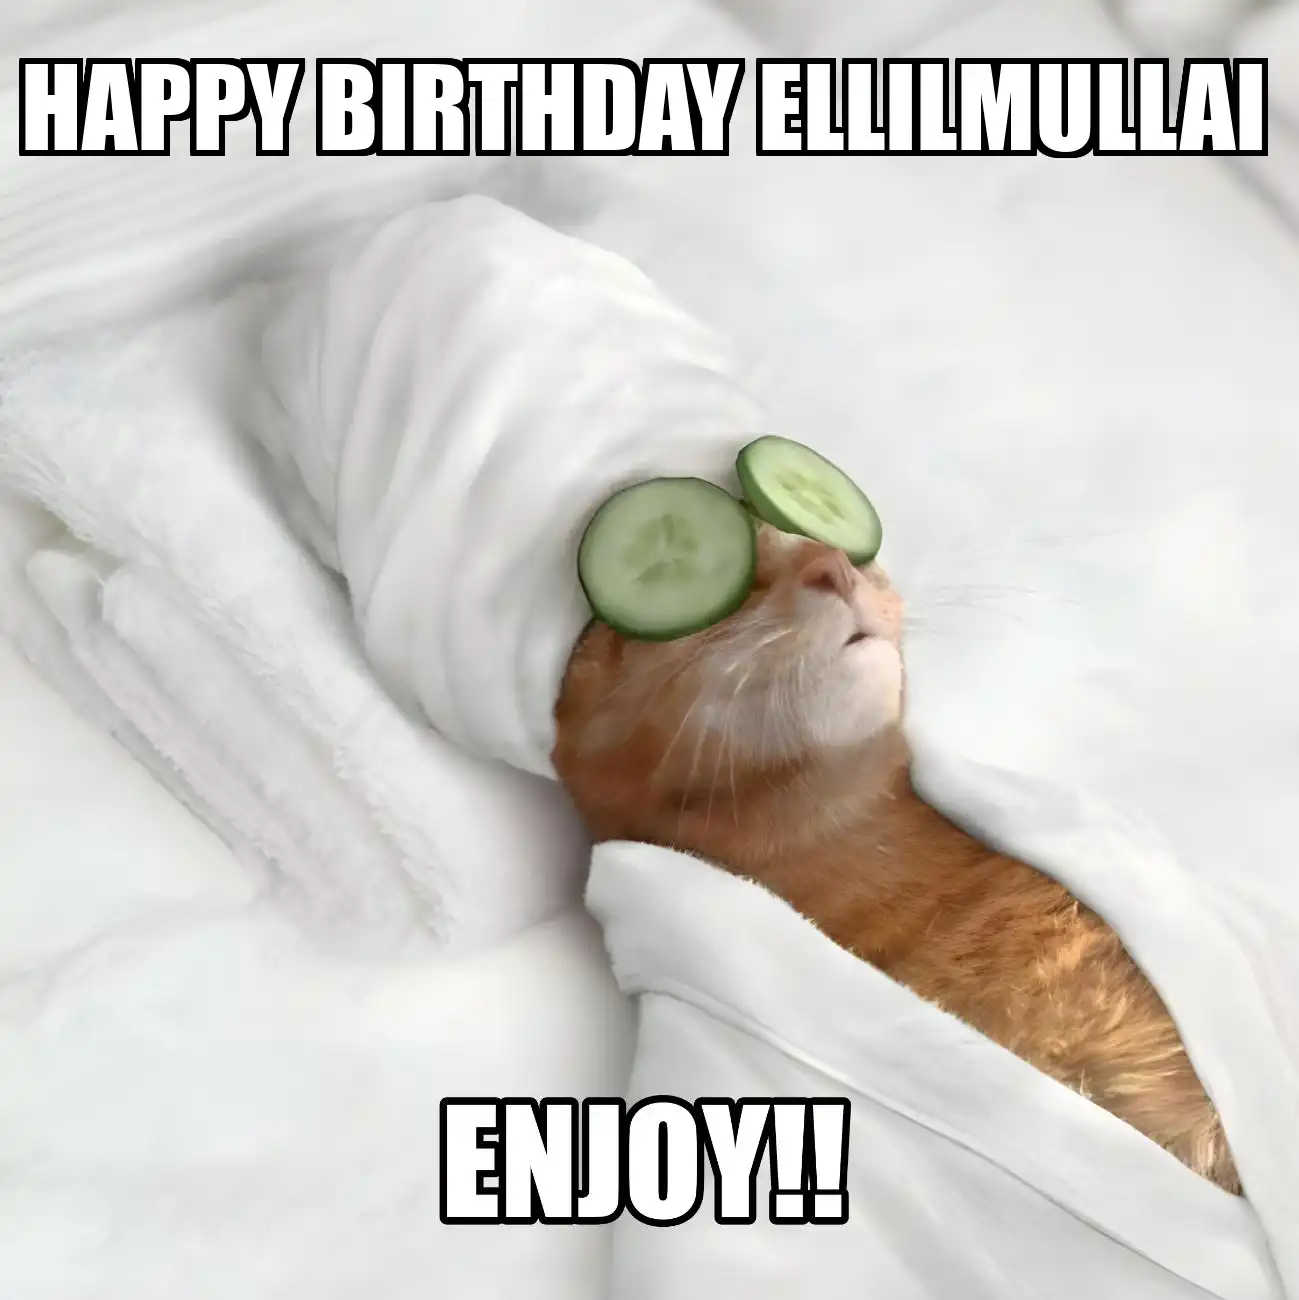 Happy Birthday Ellilmullai Enjoy Cat Meme